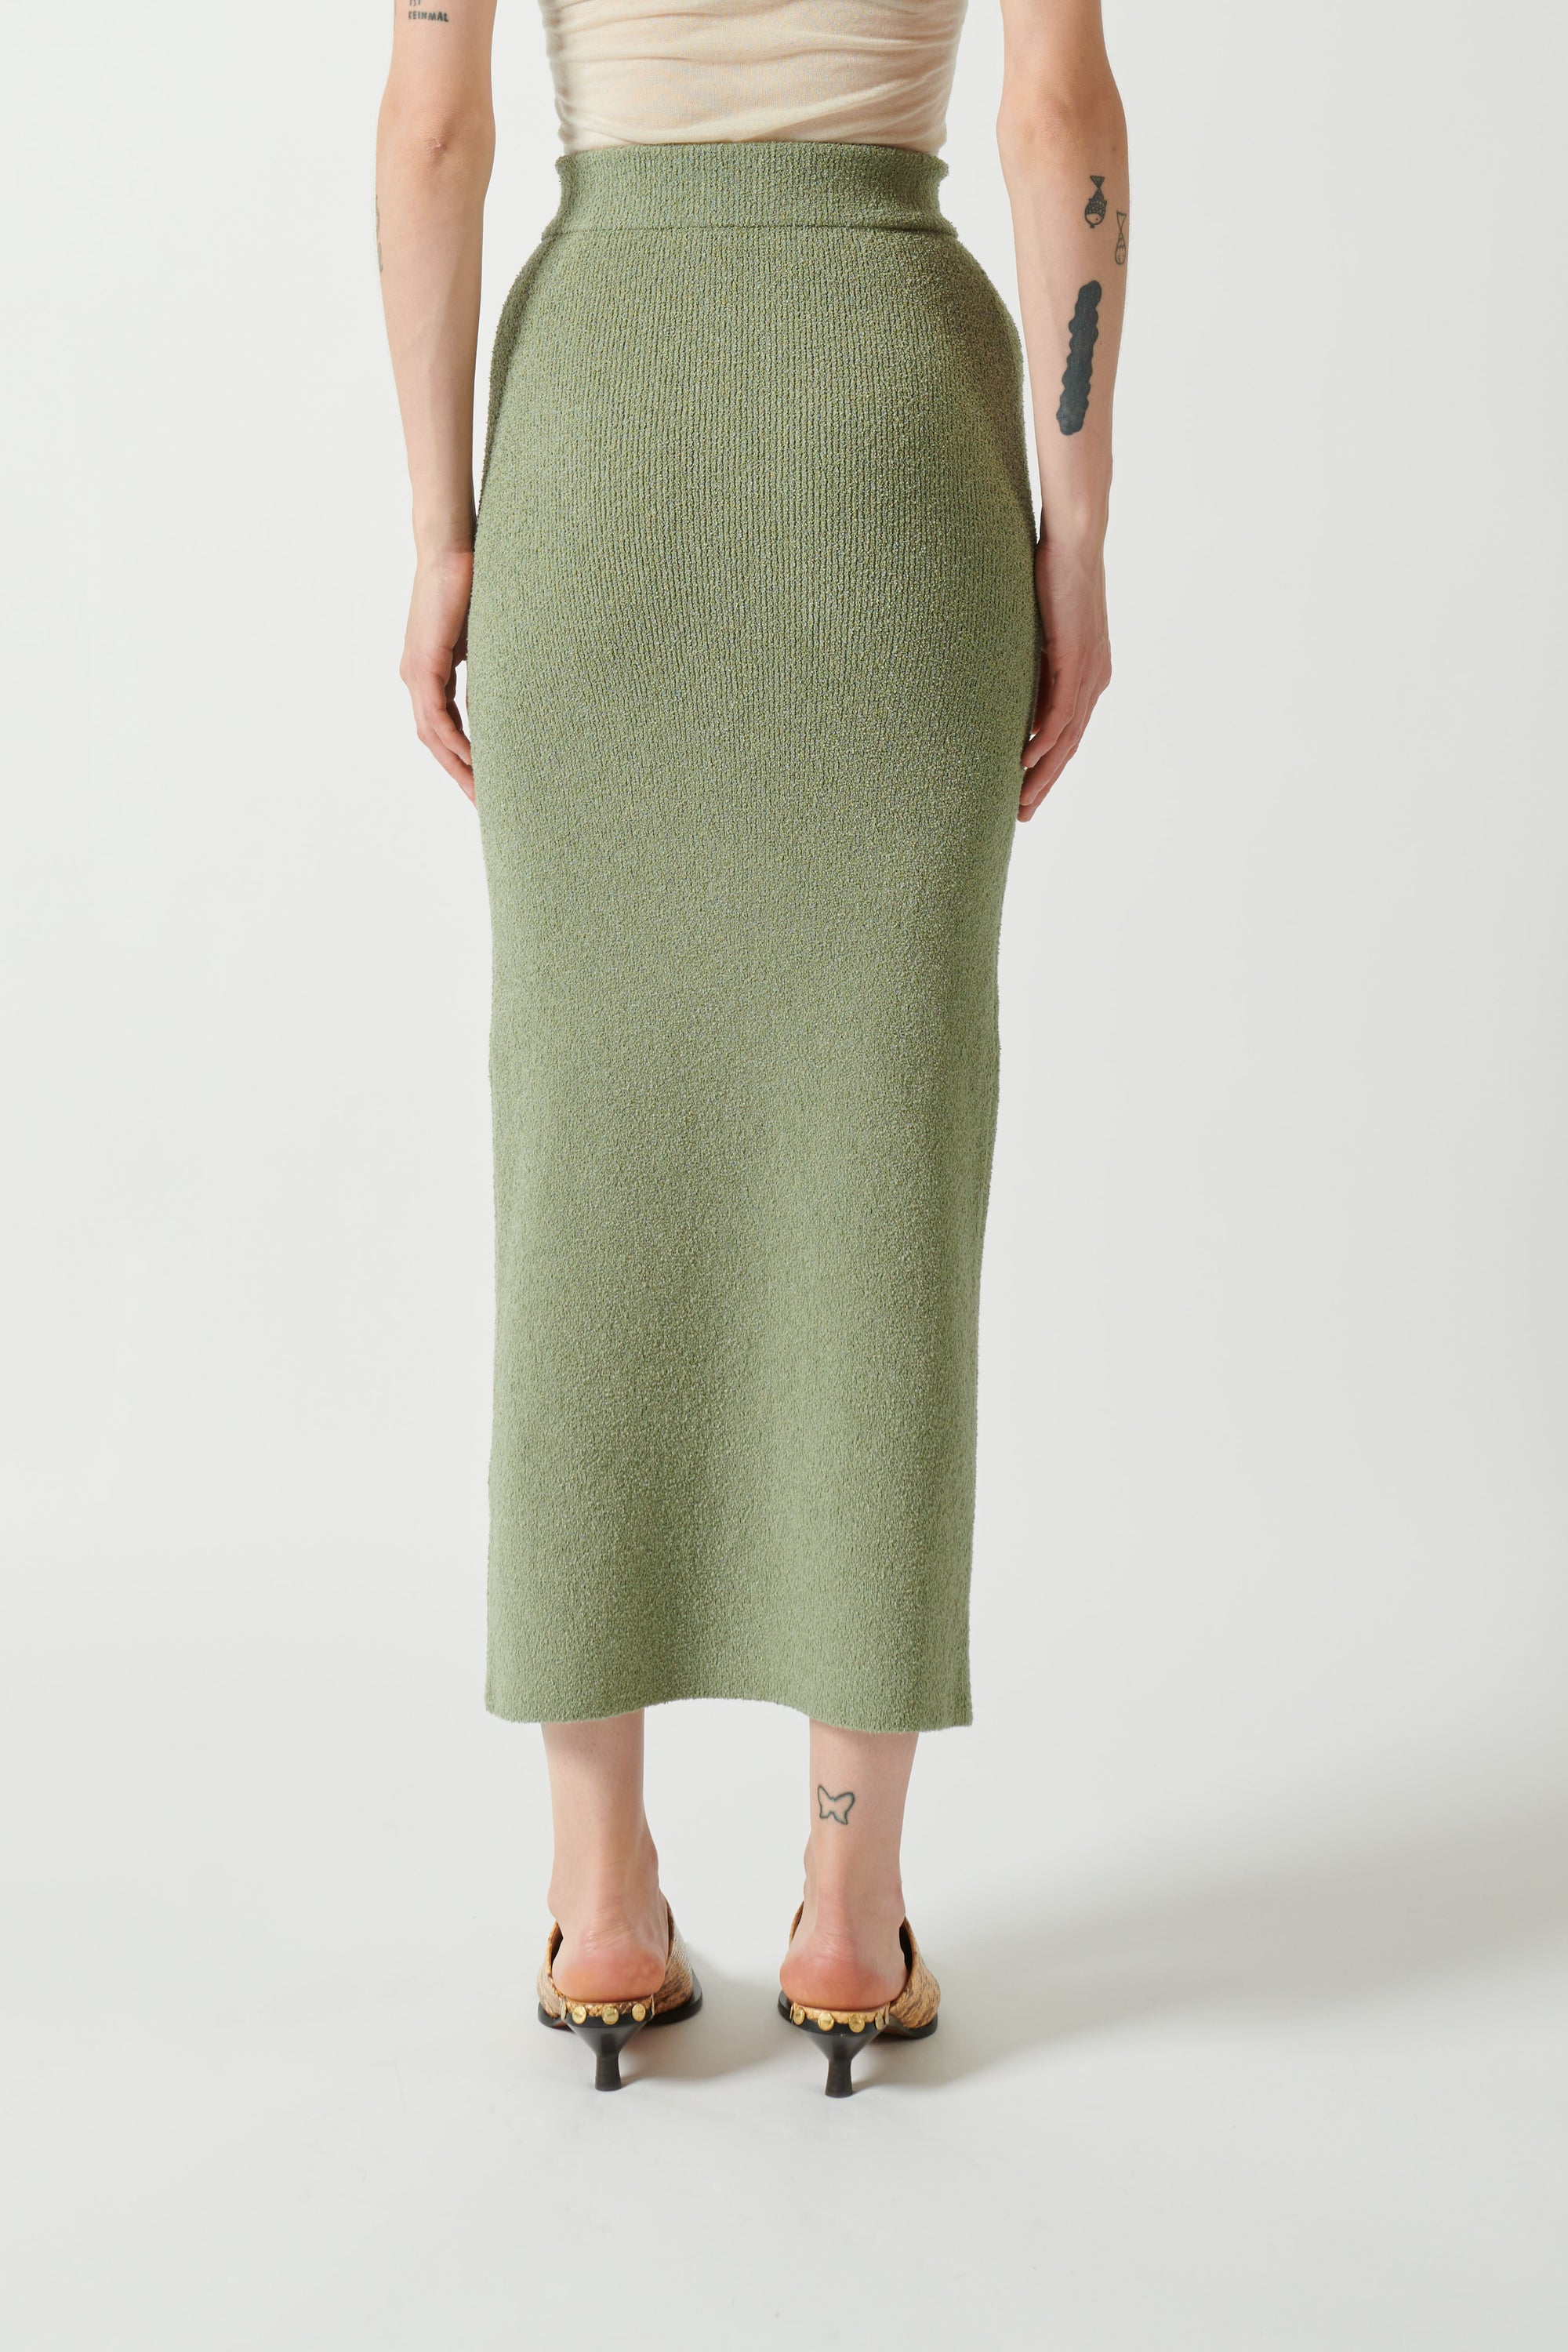 Nima Terry-Knit Midi Skirt